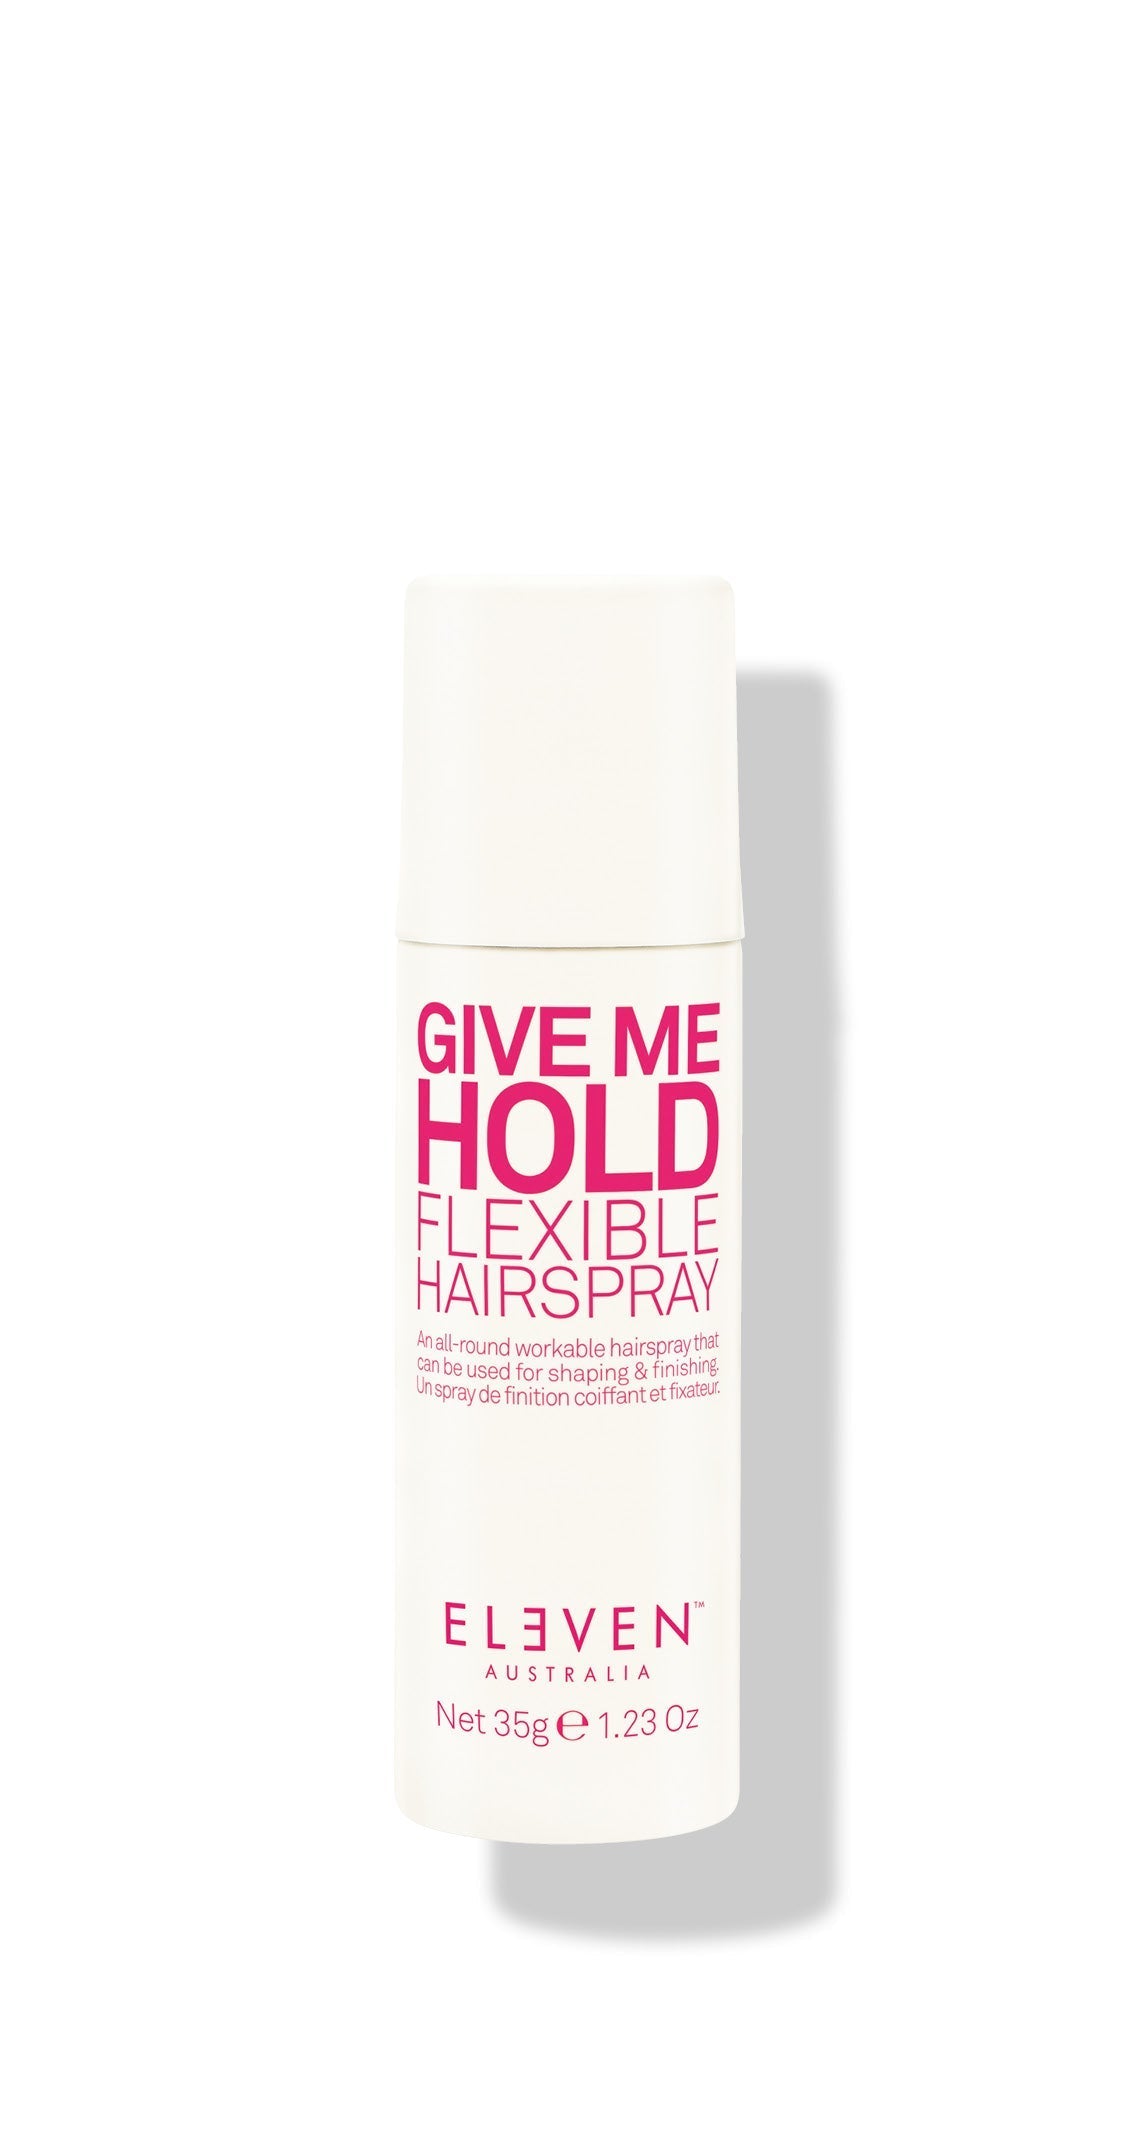 Give Me Hold Flexible Hairspray - 30g - ELEVEN Australia